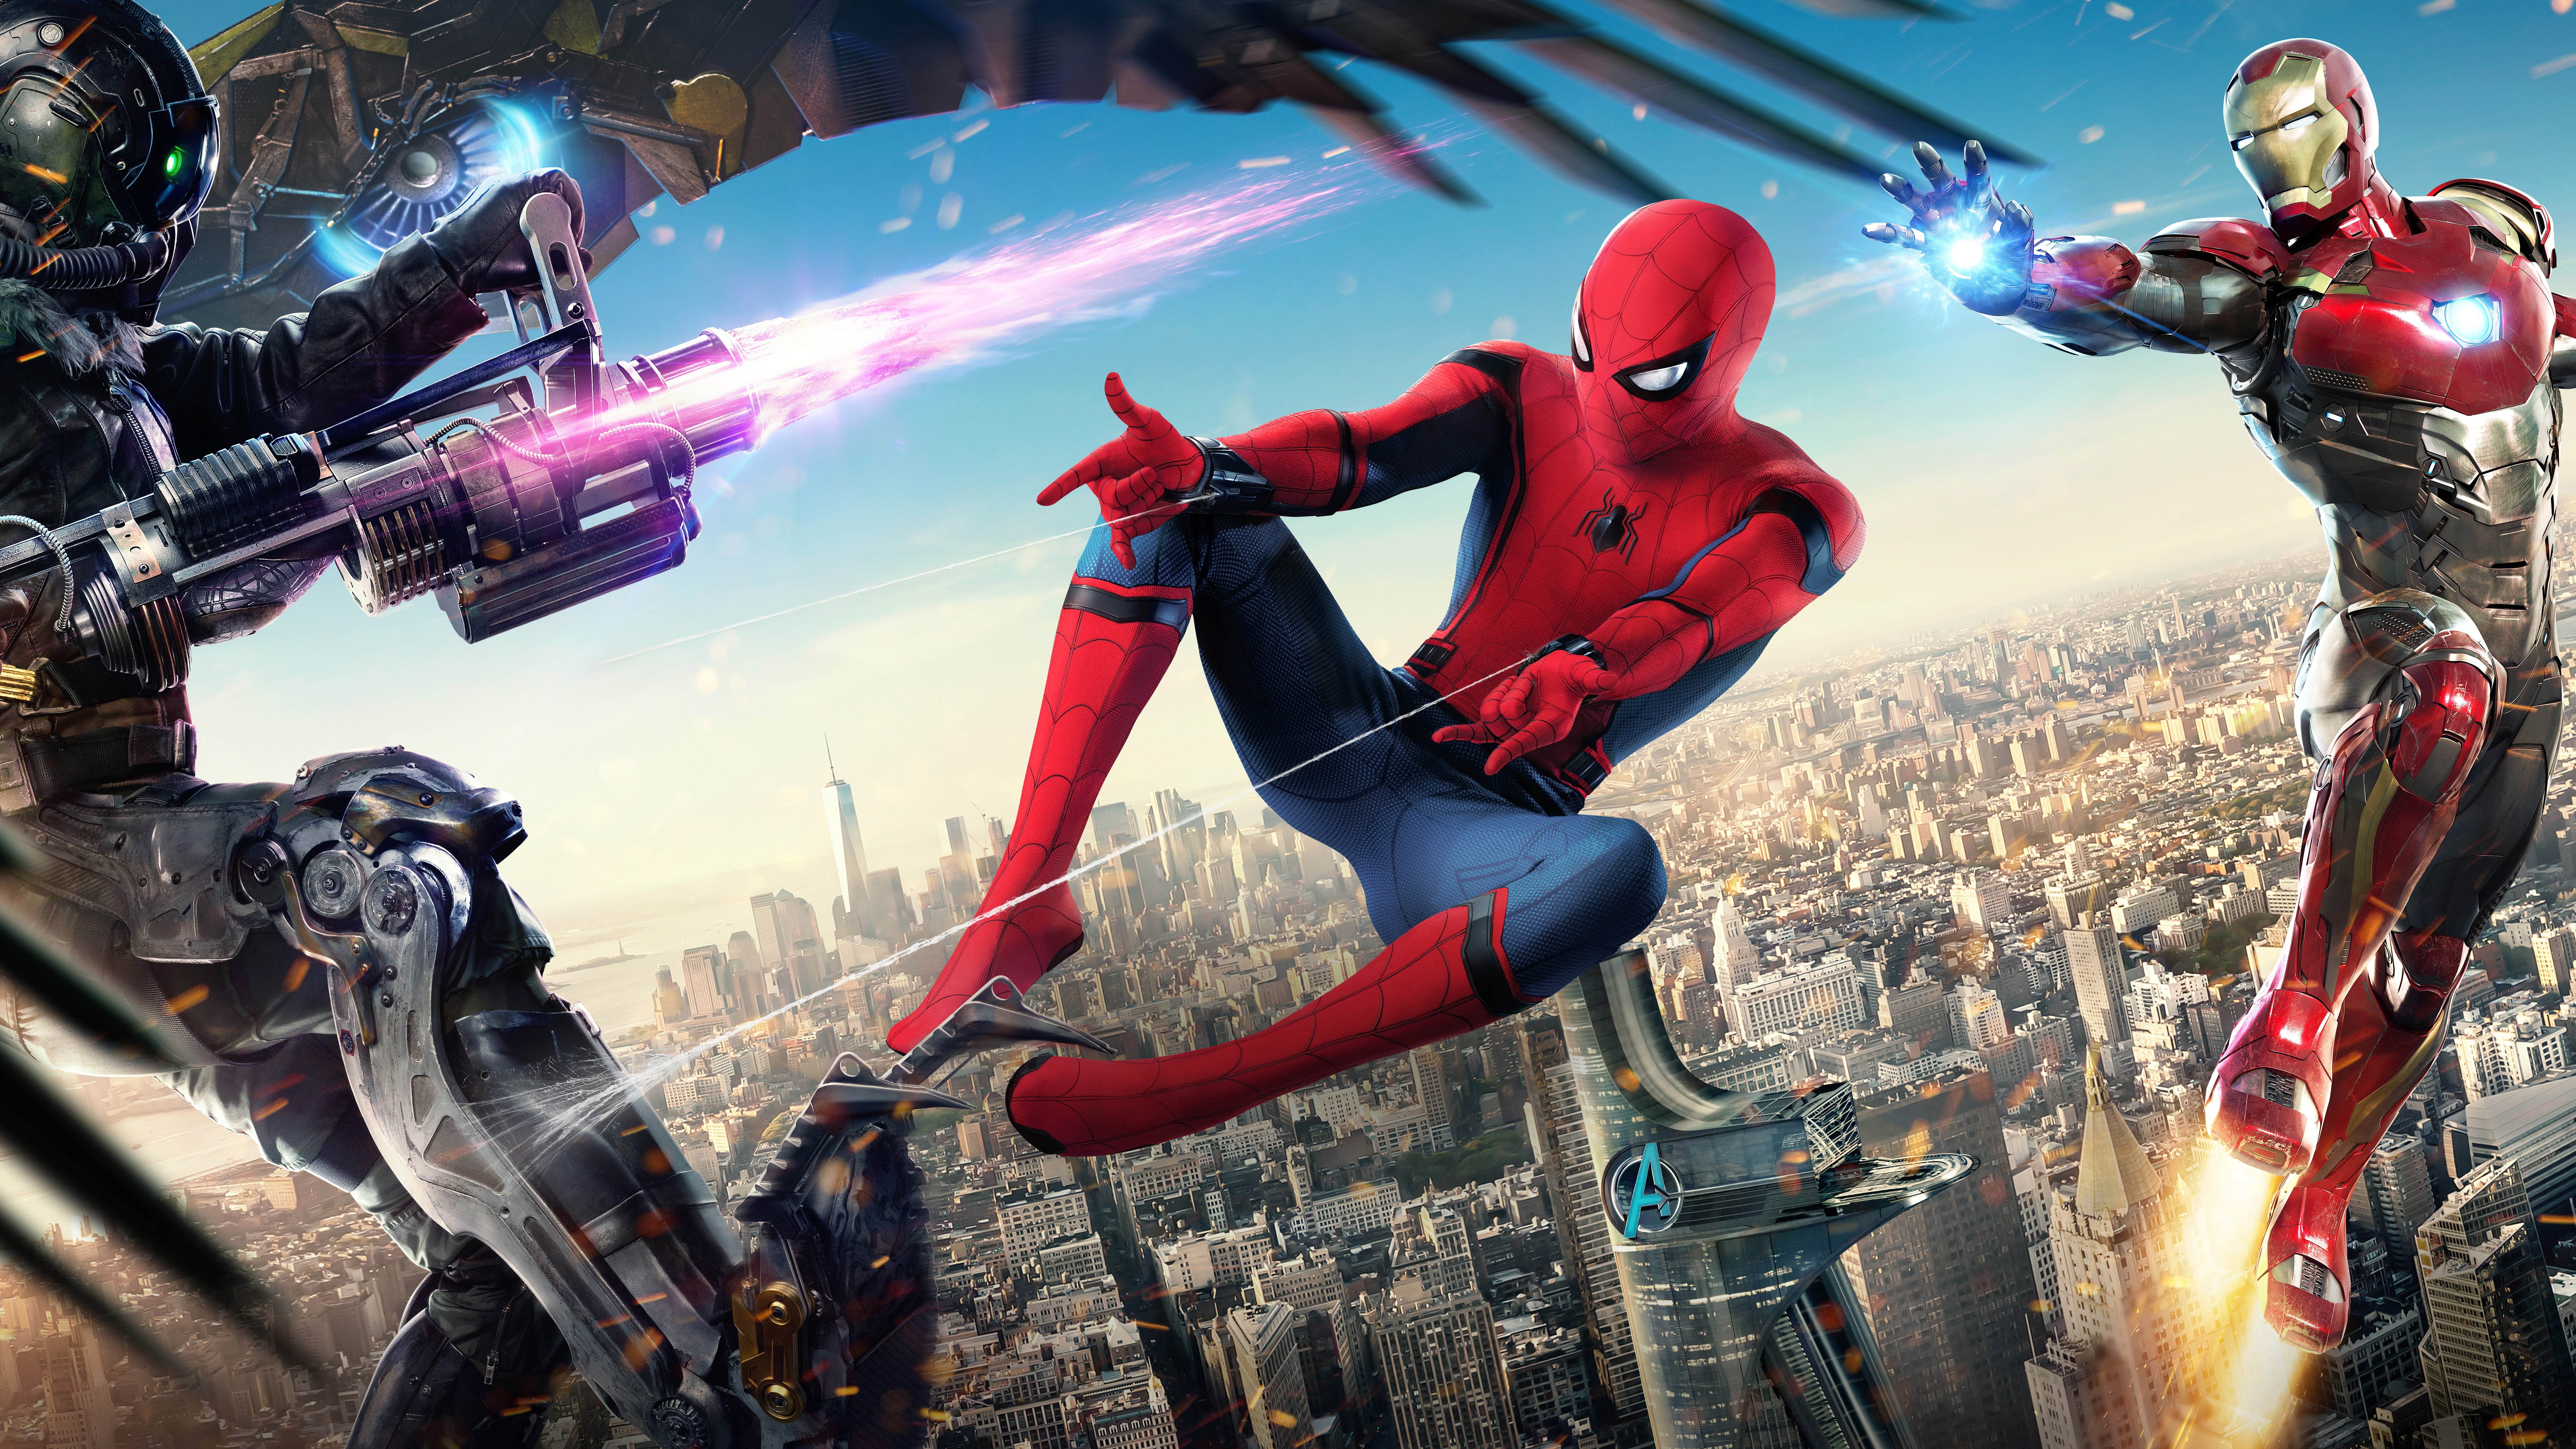 Spider-Man and Iron Man wallpaper, Spider-Man: Homecoming (2017)